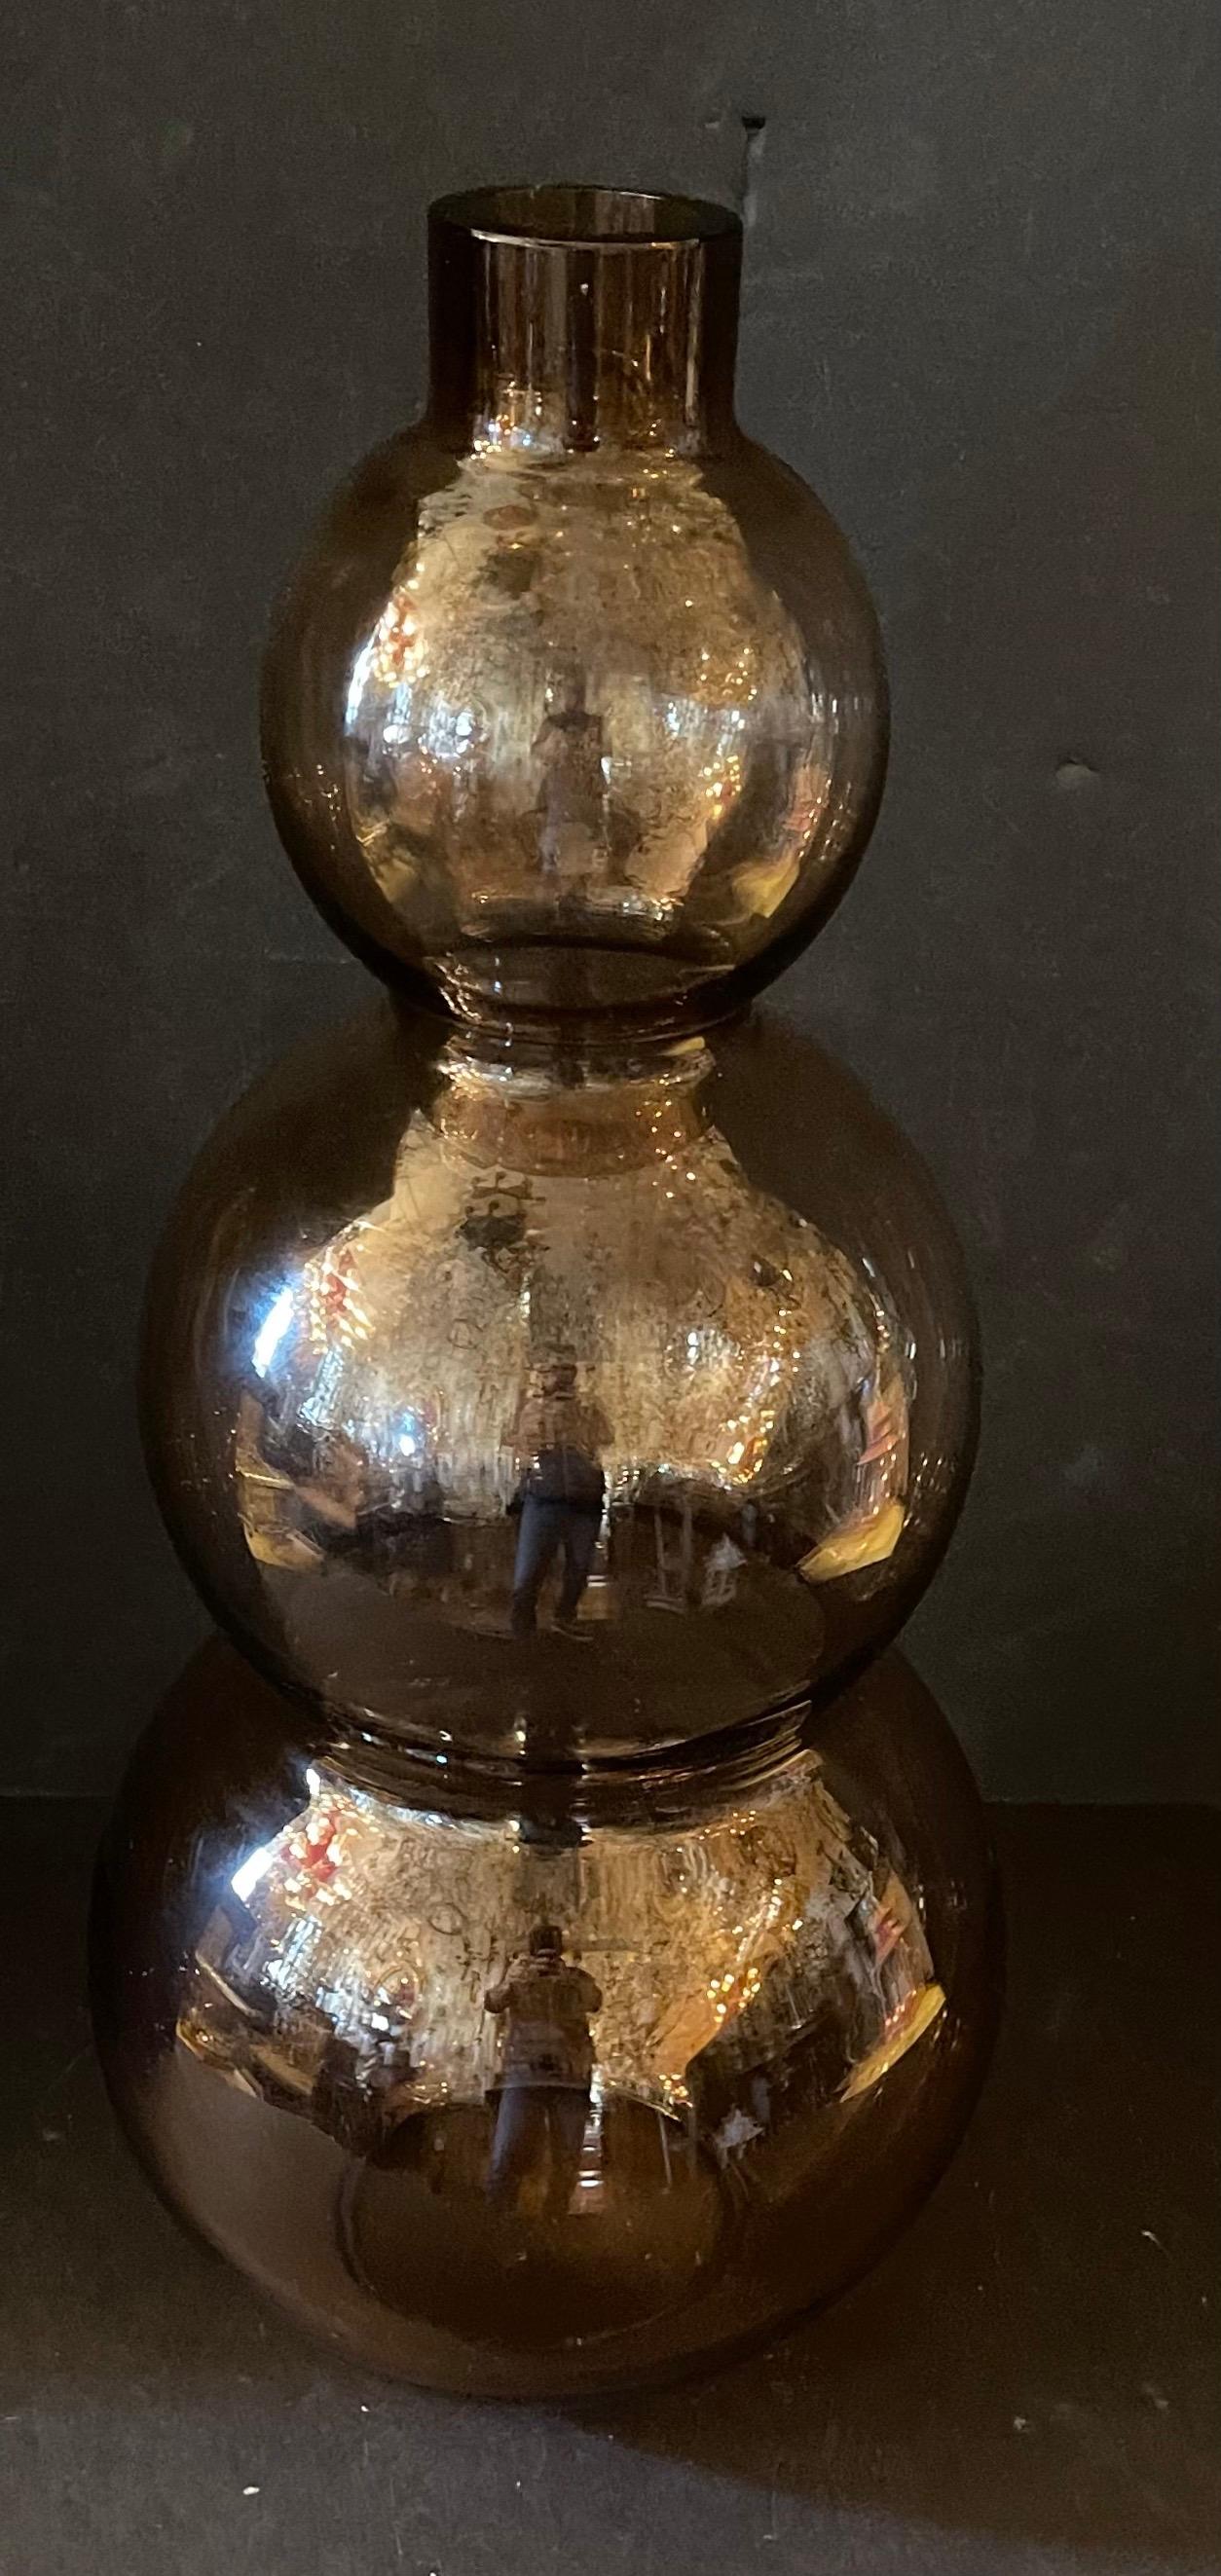 A wonderful Lorin Marsh large Cenedese Italian art glass triple gourd vessel vase in smoke grey
Dimensions: H 23